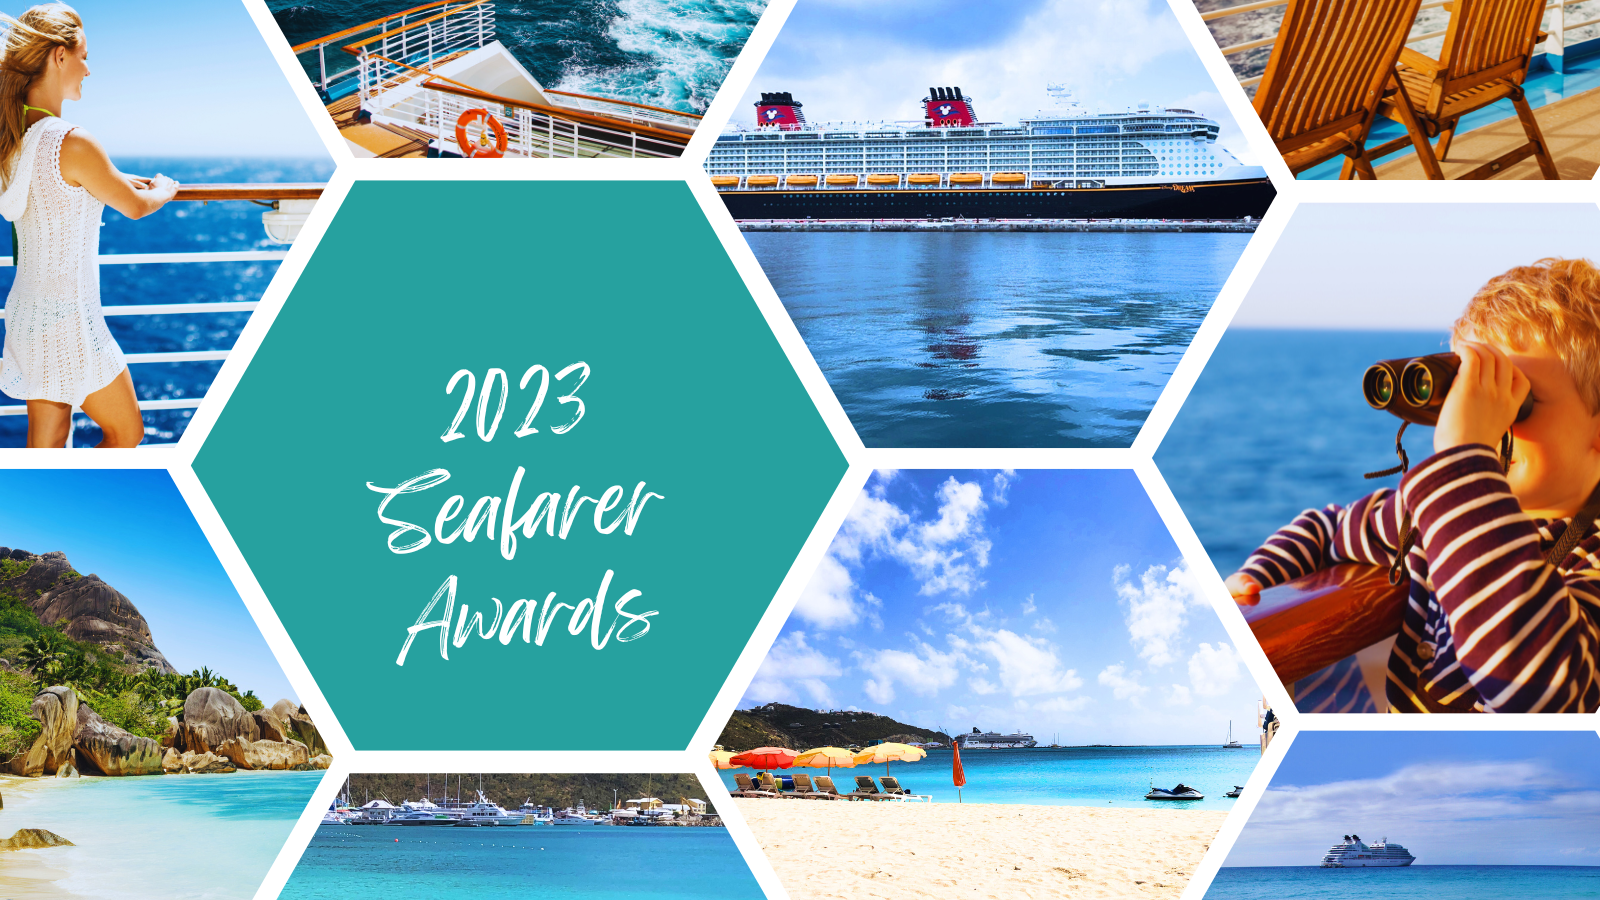 2023 Seafarer Awards - variety of cruising photos